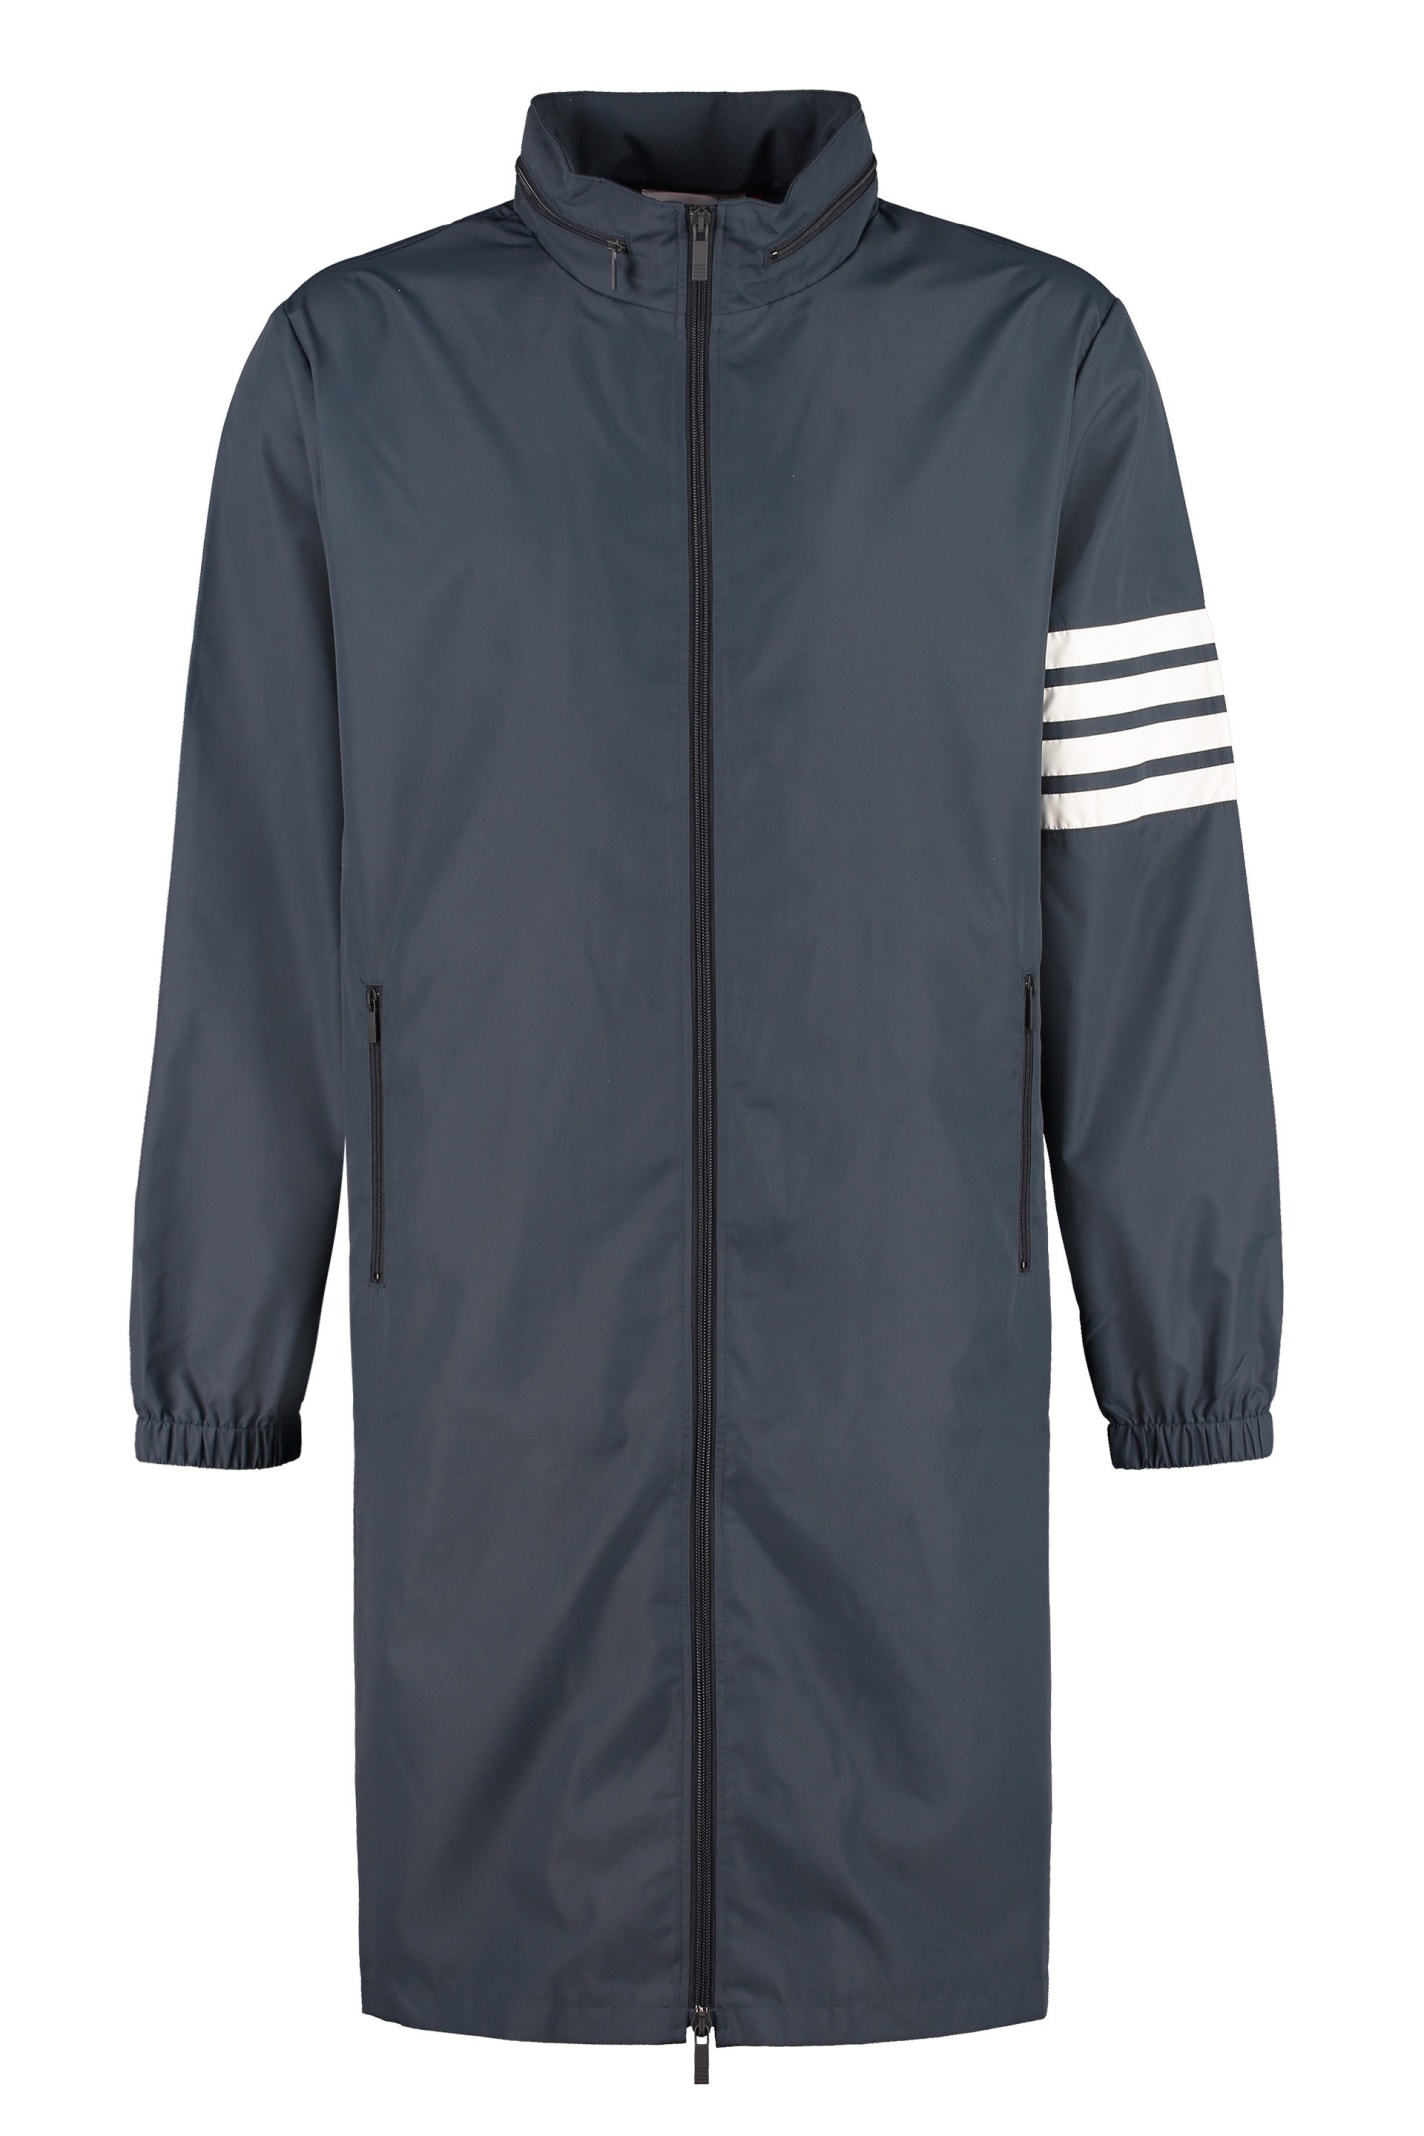 Thom Browne Extractable Hood Jacket